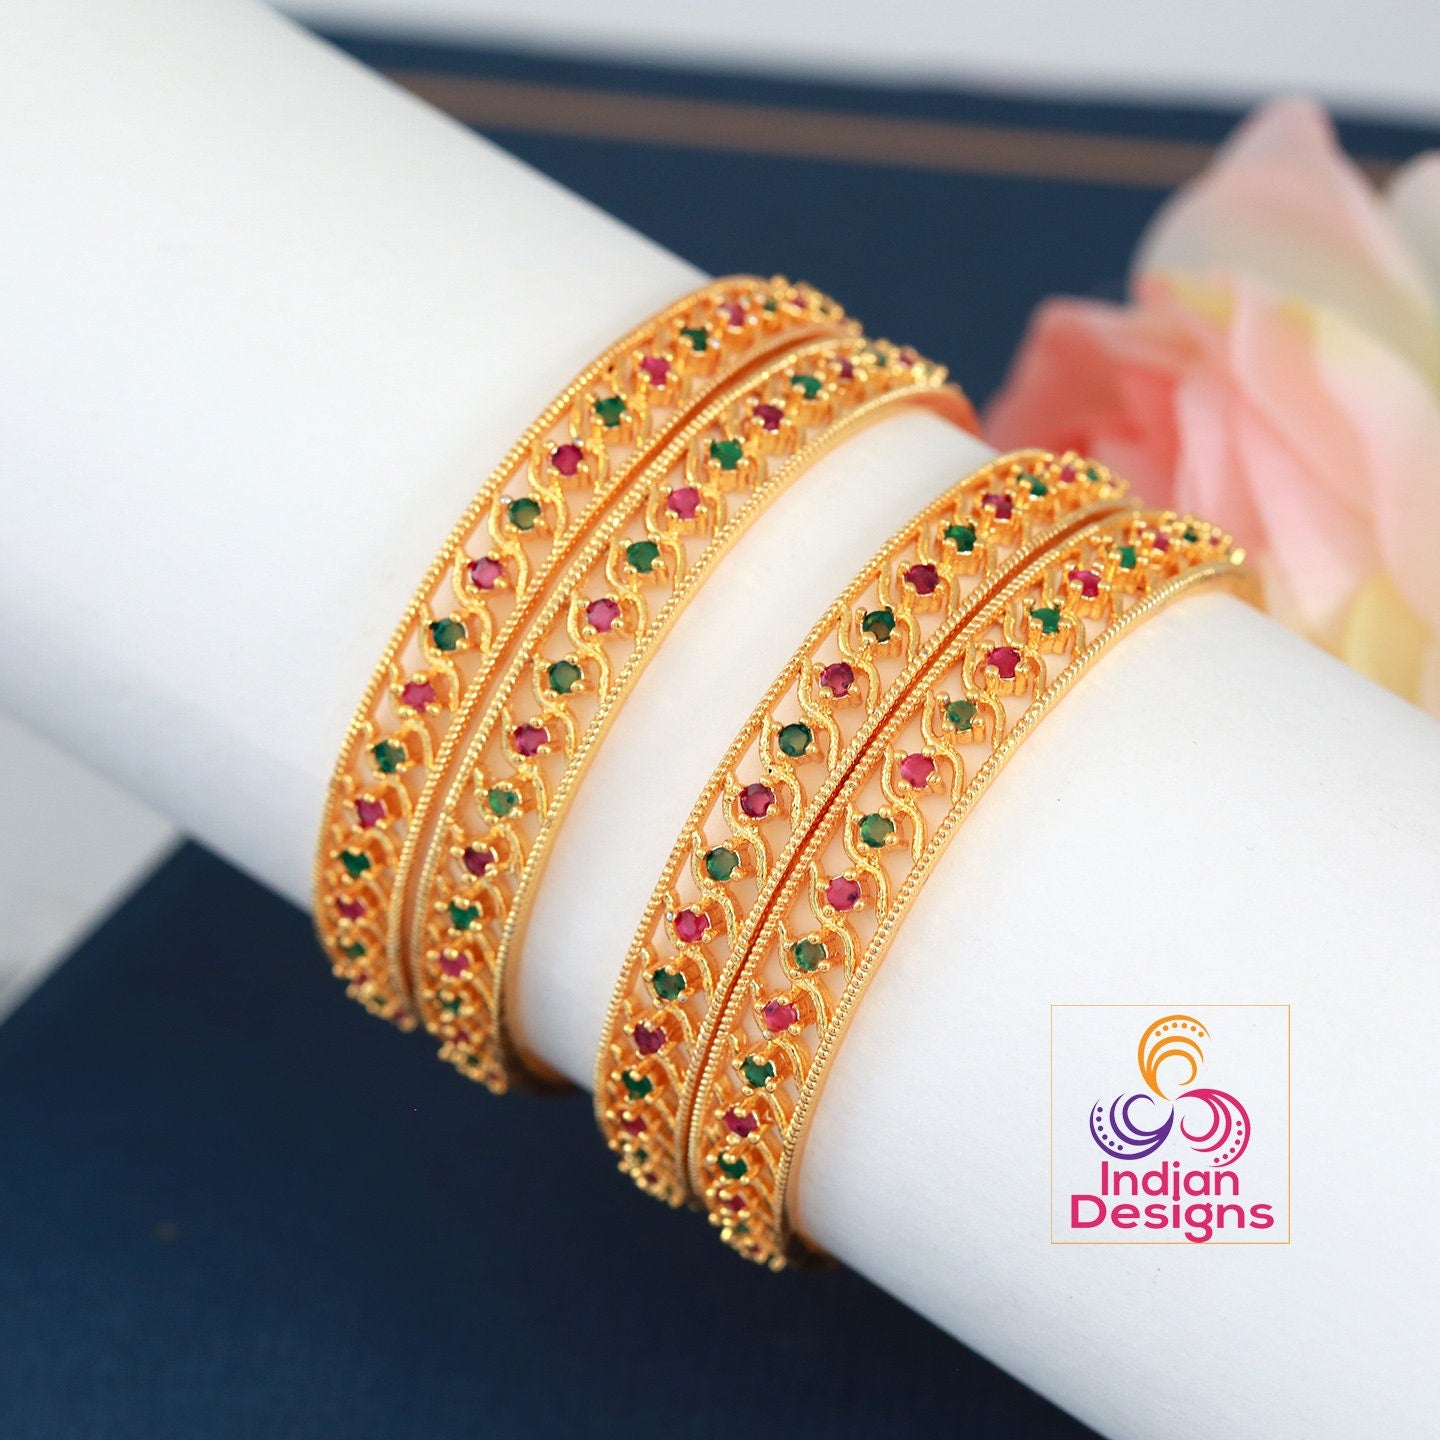 4pcs One gram gold Bridal bangle Set | American diamond Ruby emerald stone gold bangles Indian Designs | South Indian style wedding bangles